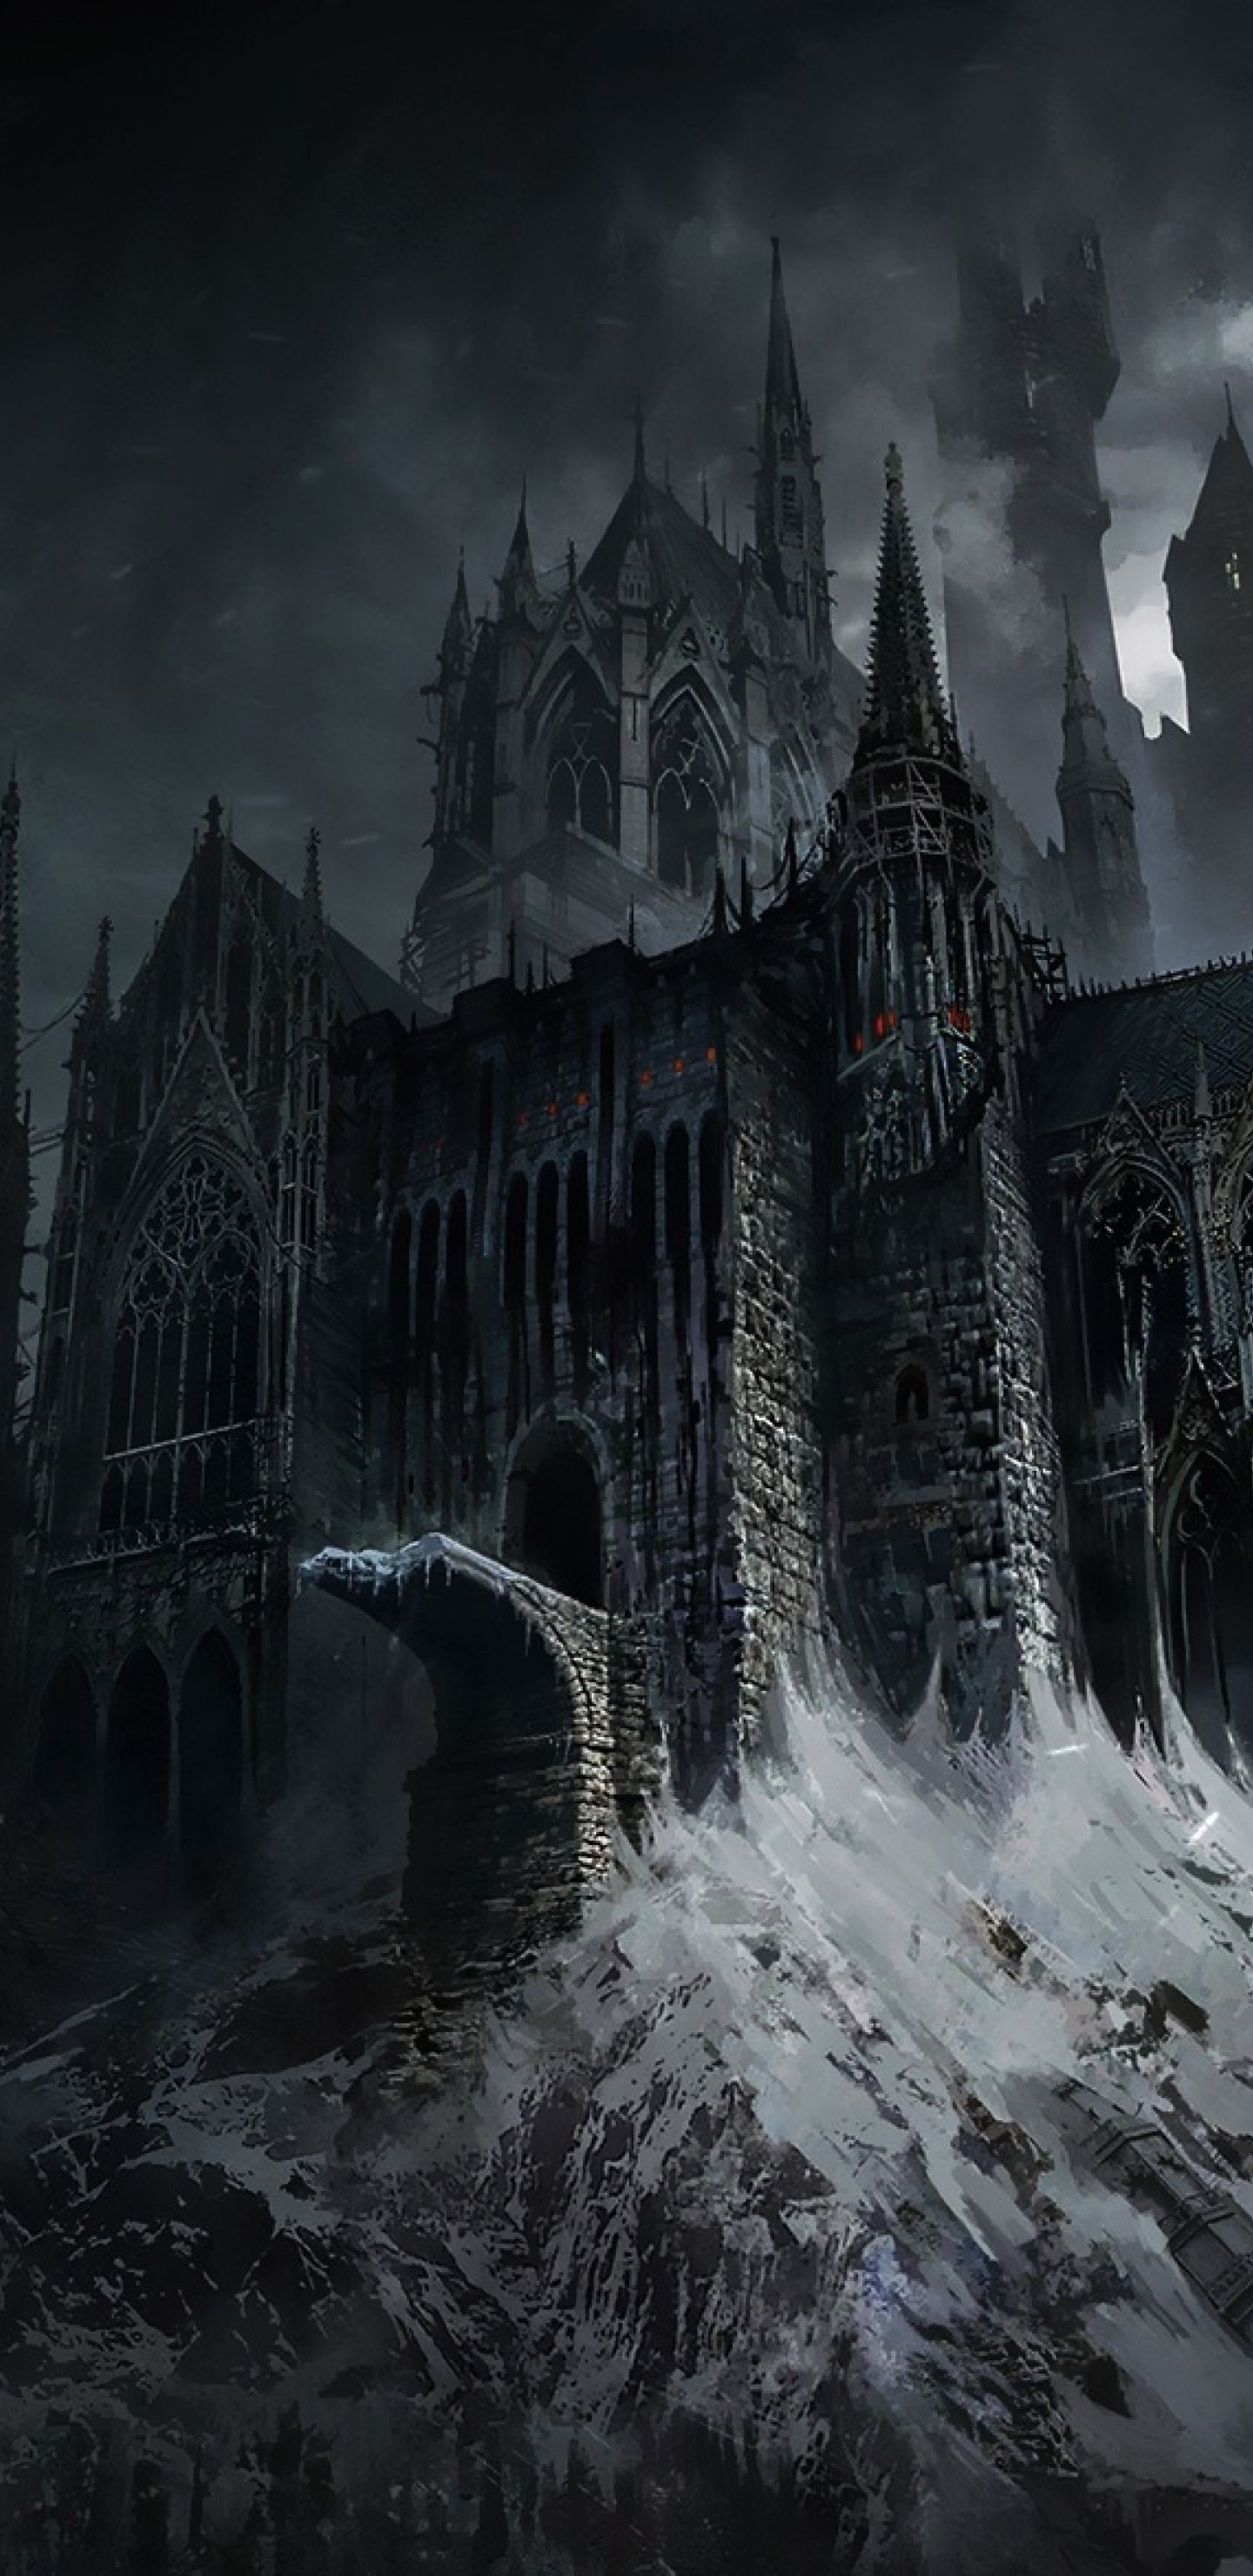 Evil Castle Dark Fantasy Samsung Galaxy Note S S SQHD Wallpaper, HD Fantasy 4K Wallpaper, Image, Photo and Background